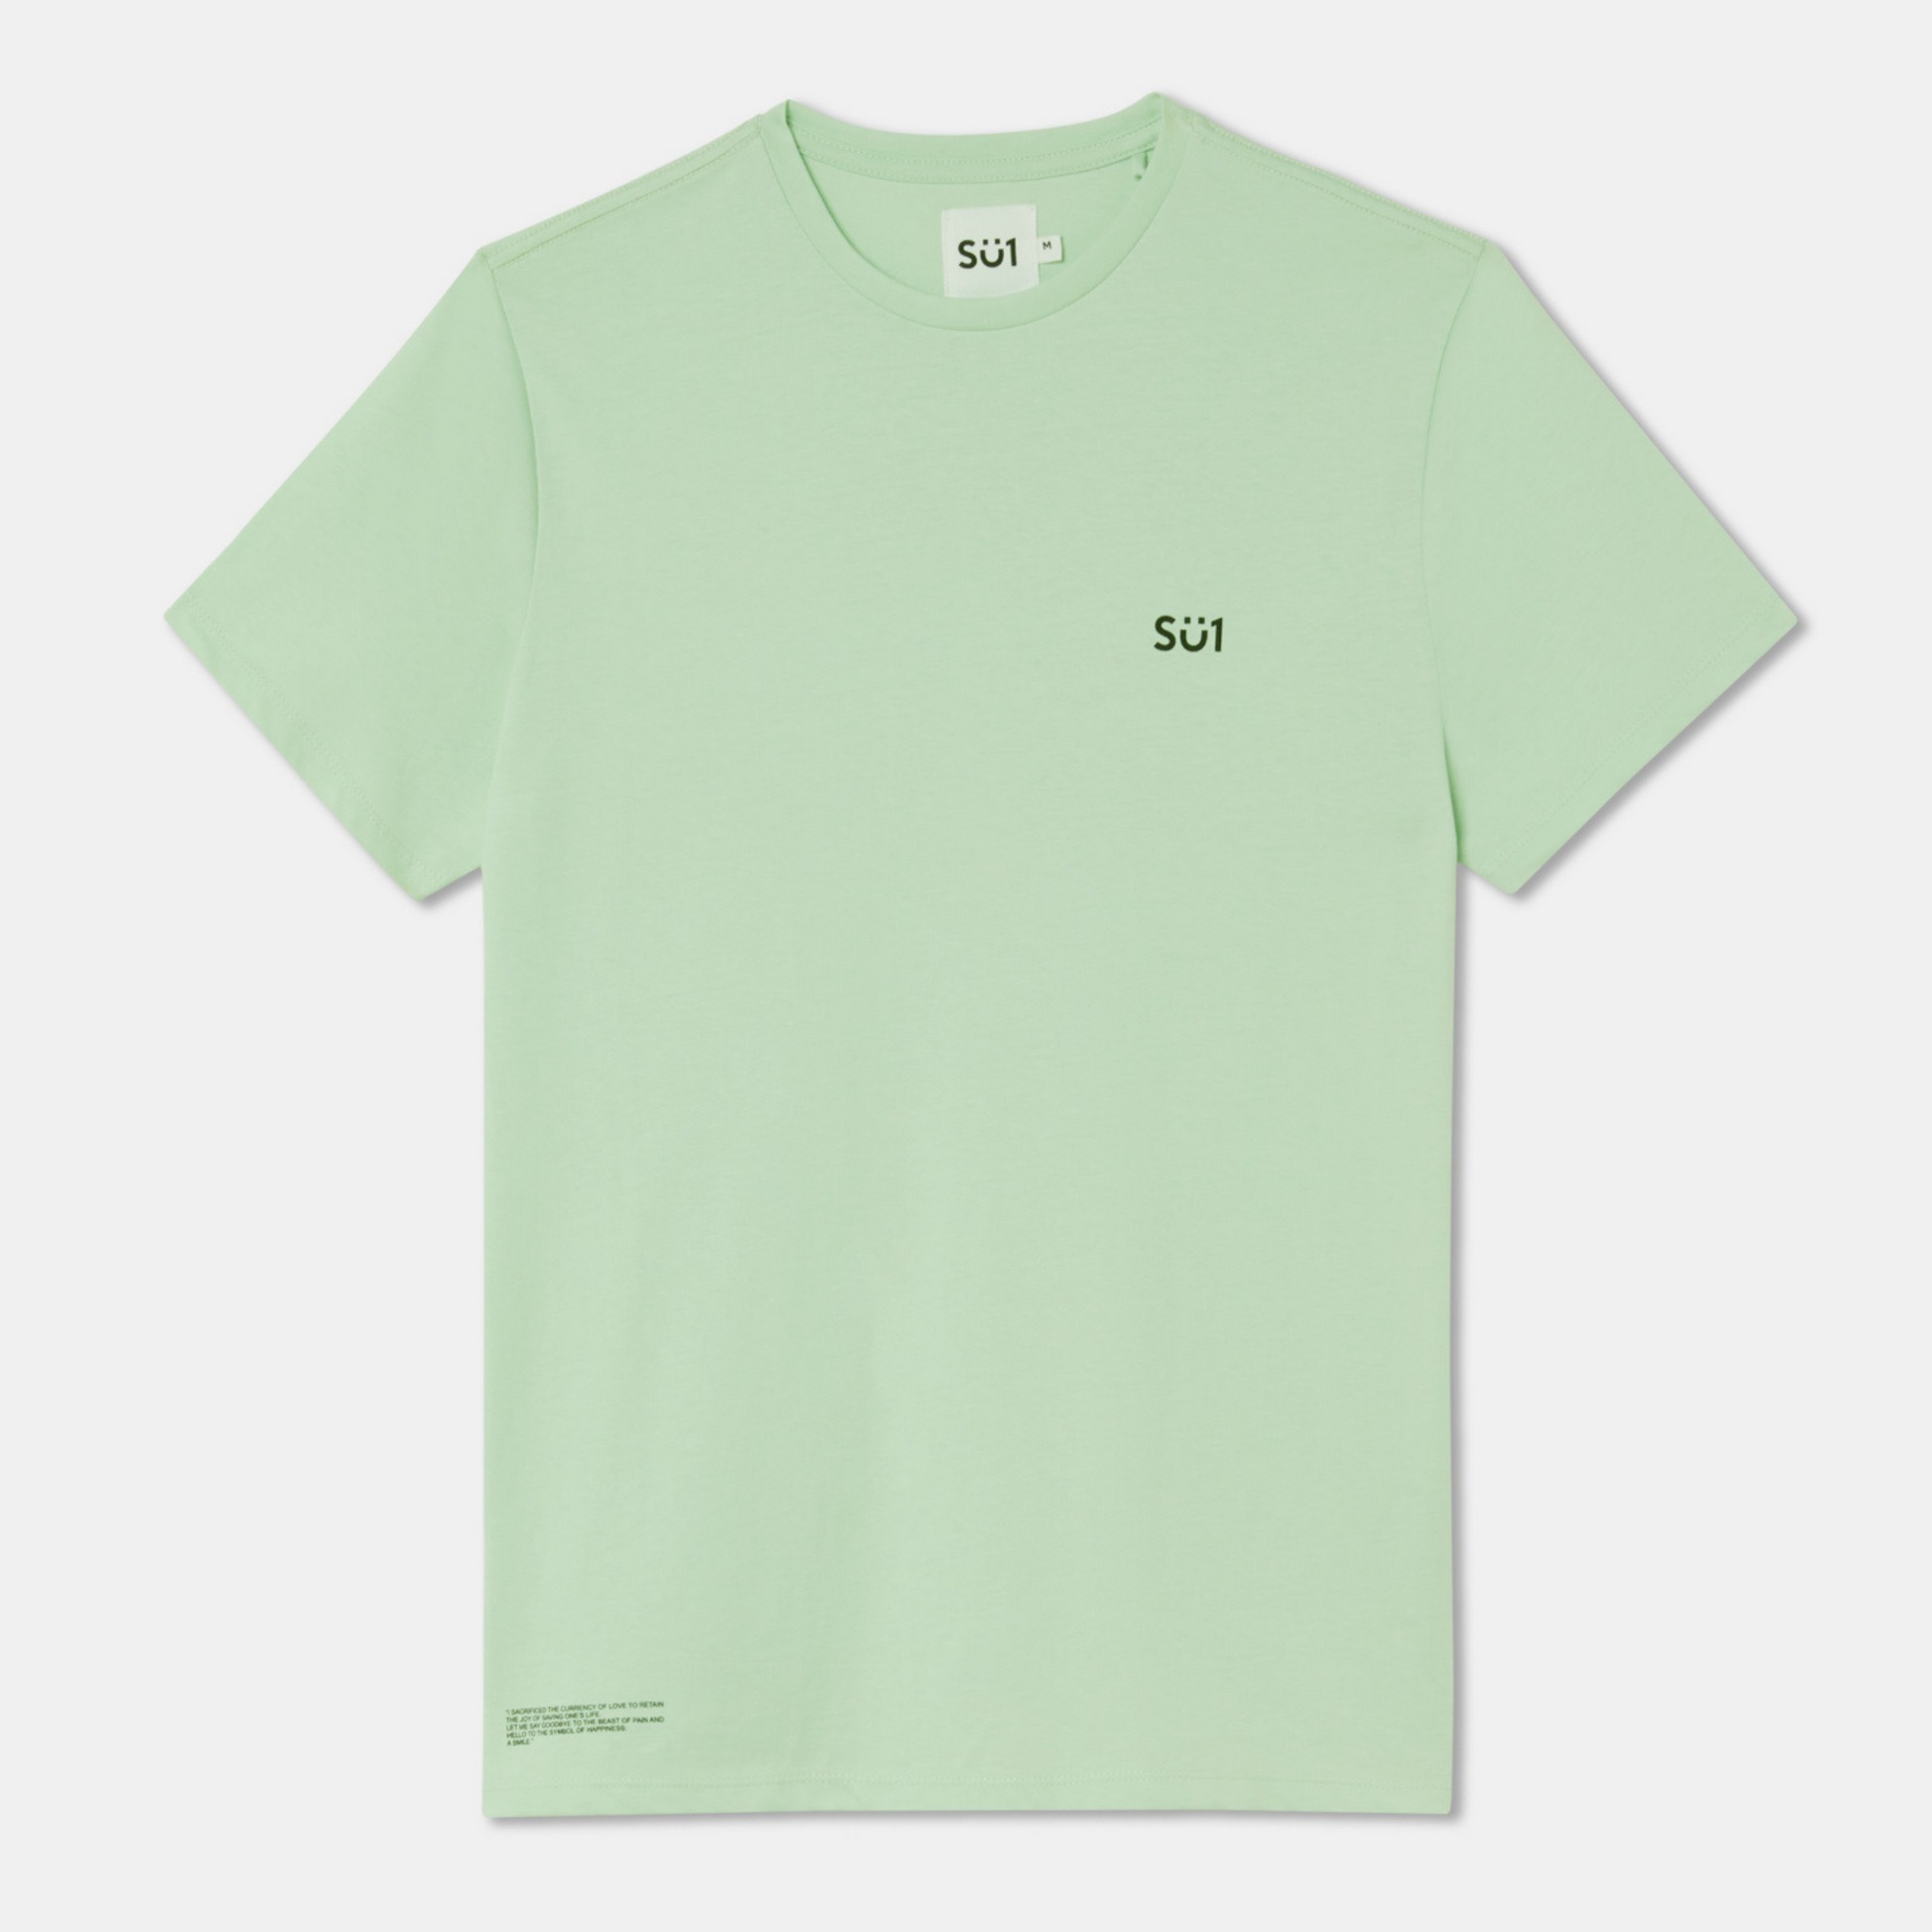 Oversized Mint Green T-shirt Small Logo Su1 Front